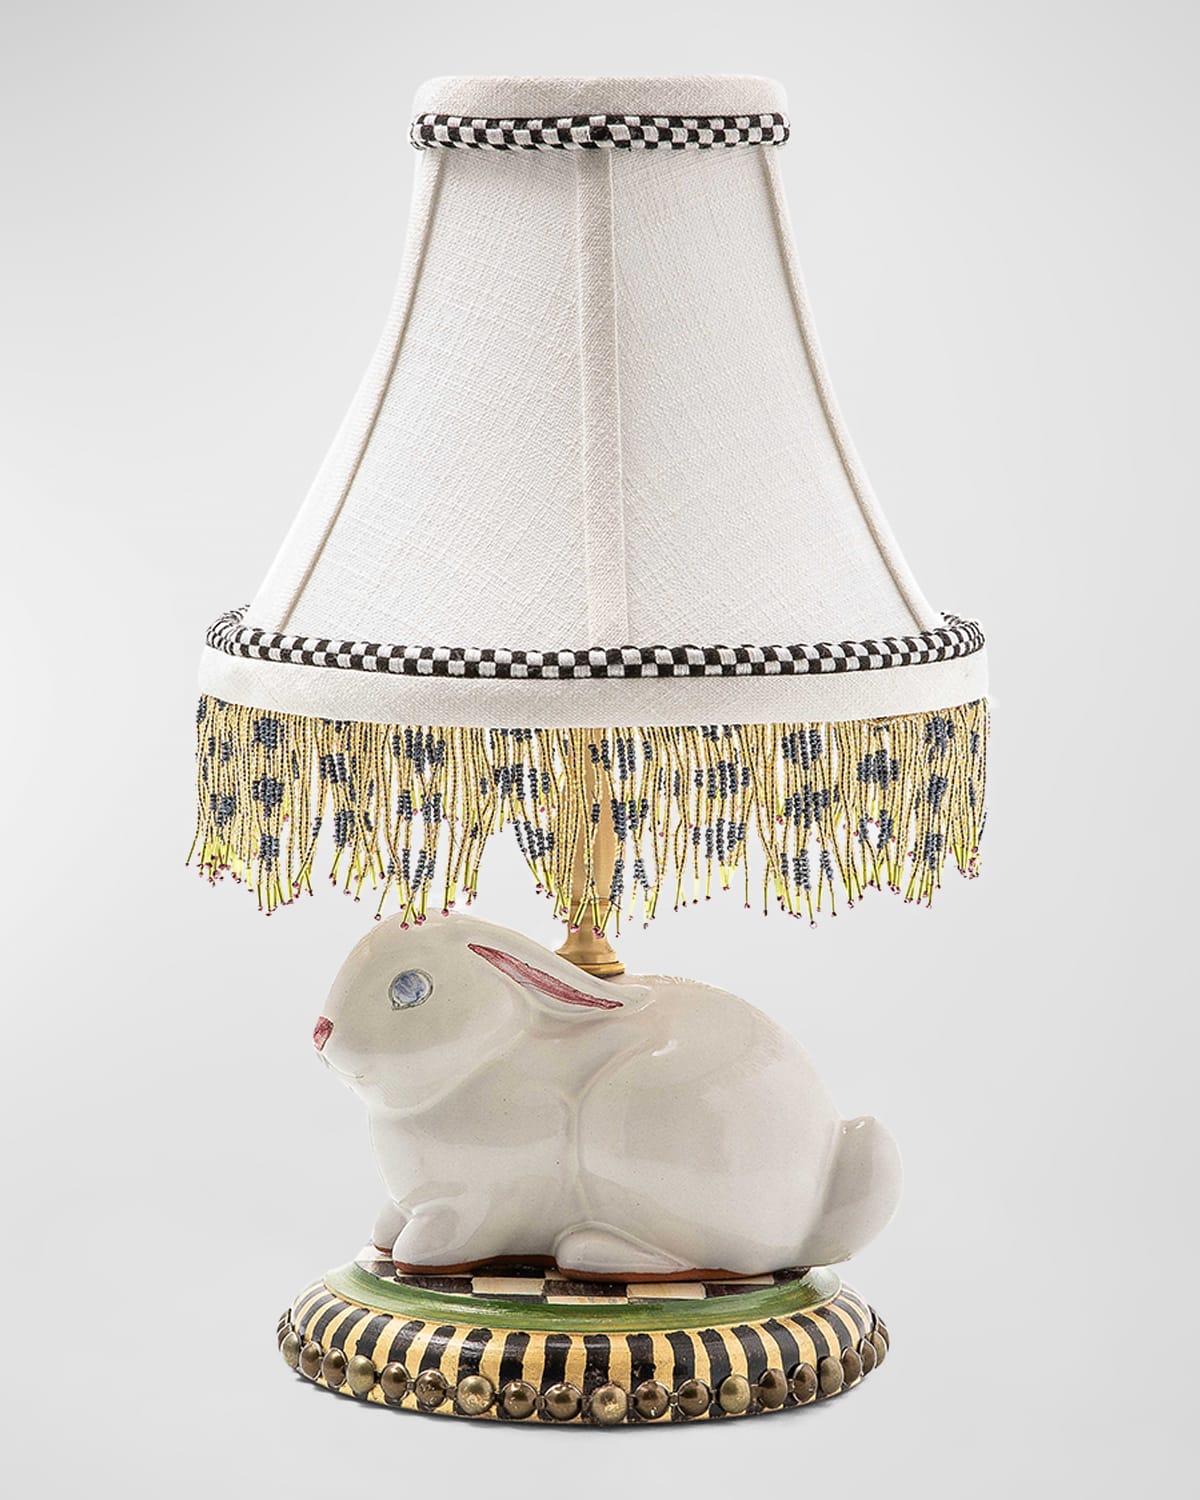 Mackenzie-childs Rabbit Warren 16" Table Lamp In White